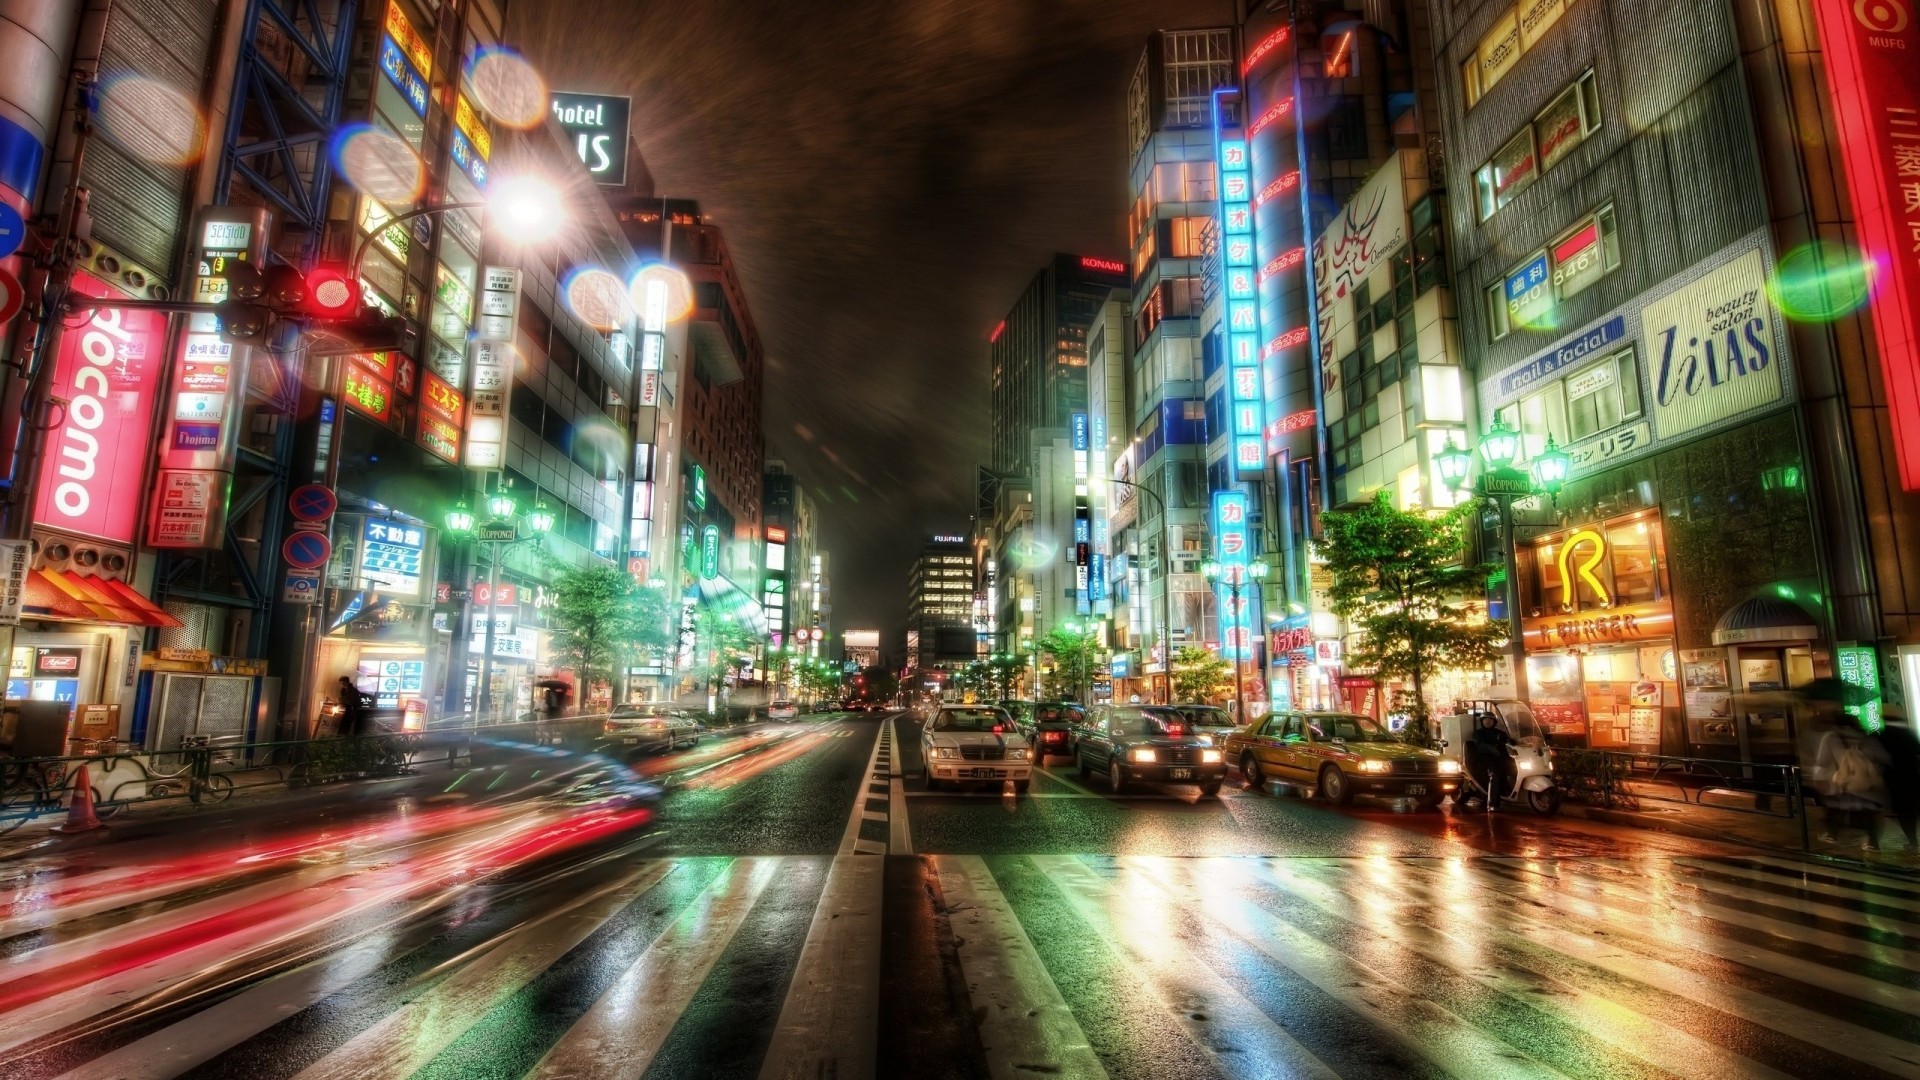 General 1920x1080 city HDR traffic digital art cityscape long exposure night Japan Asia urban